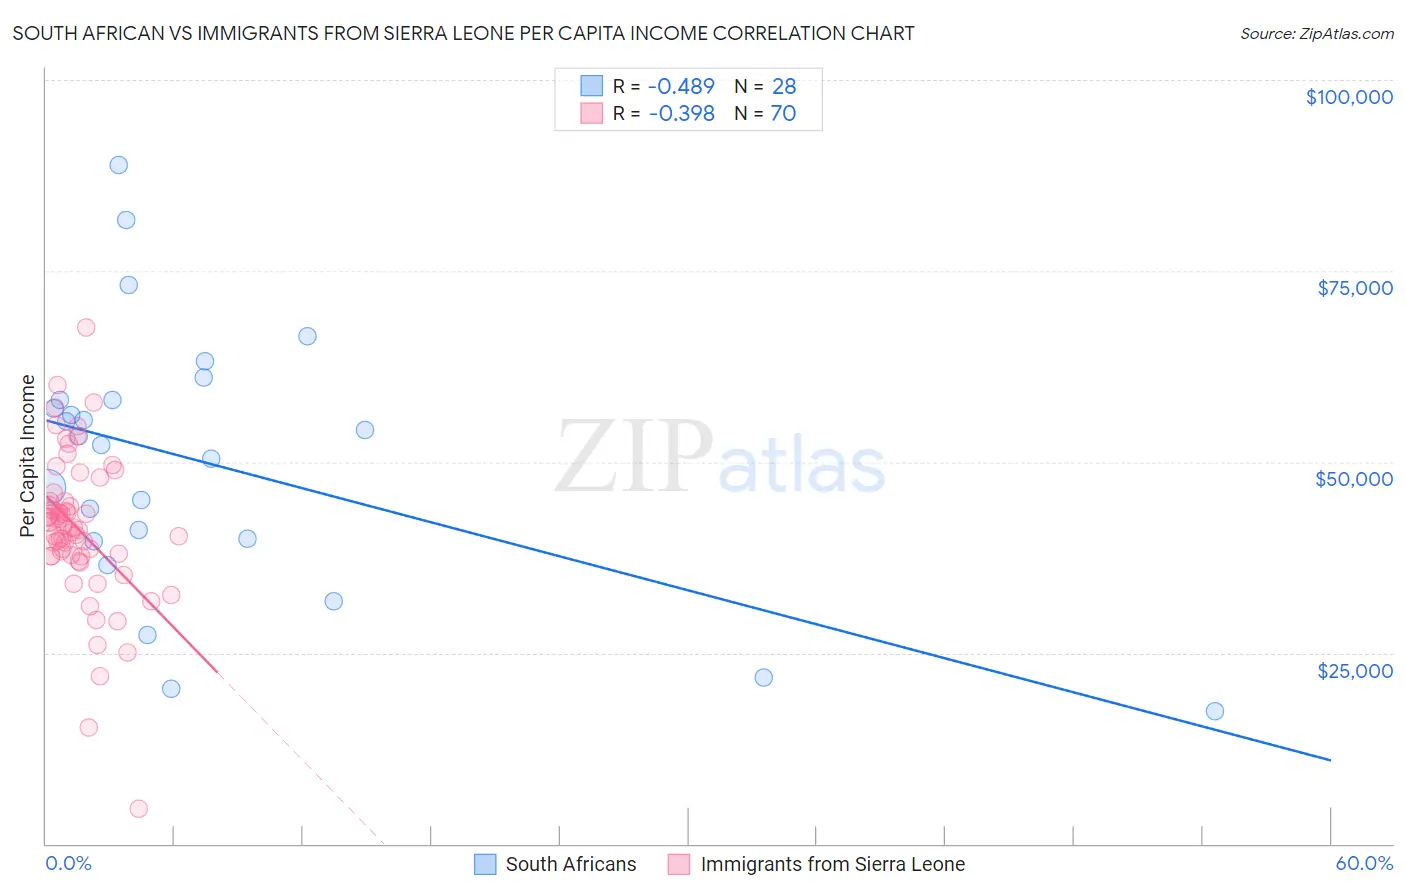 South African vs Immigrants from Sierra Leone Per Capita Income